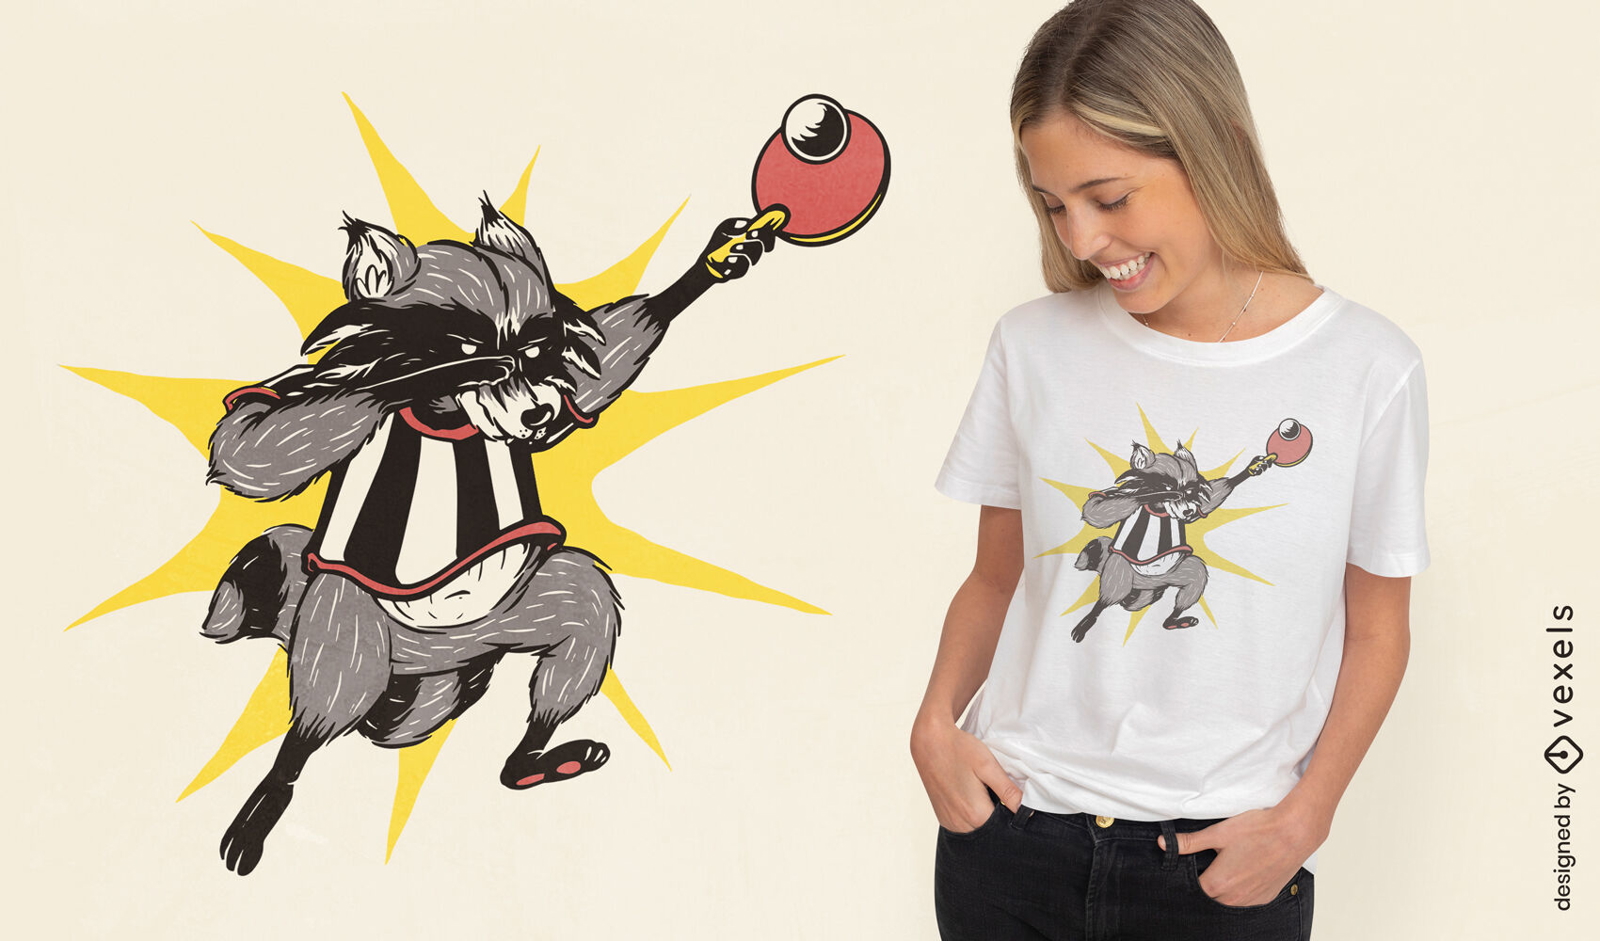 Ping pong raccoon t-shirt design